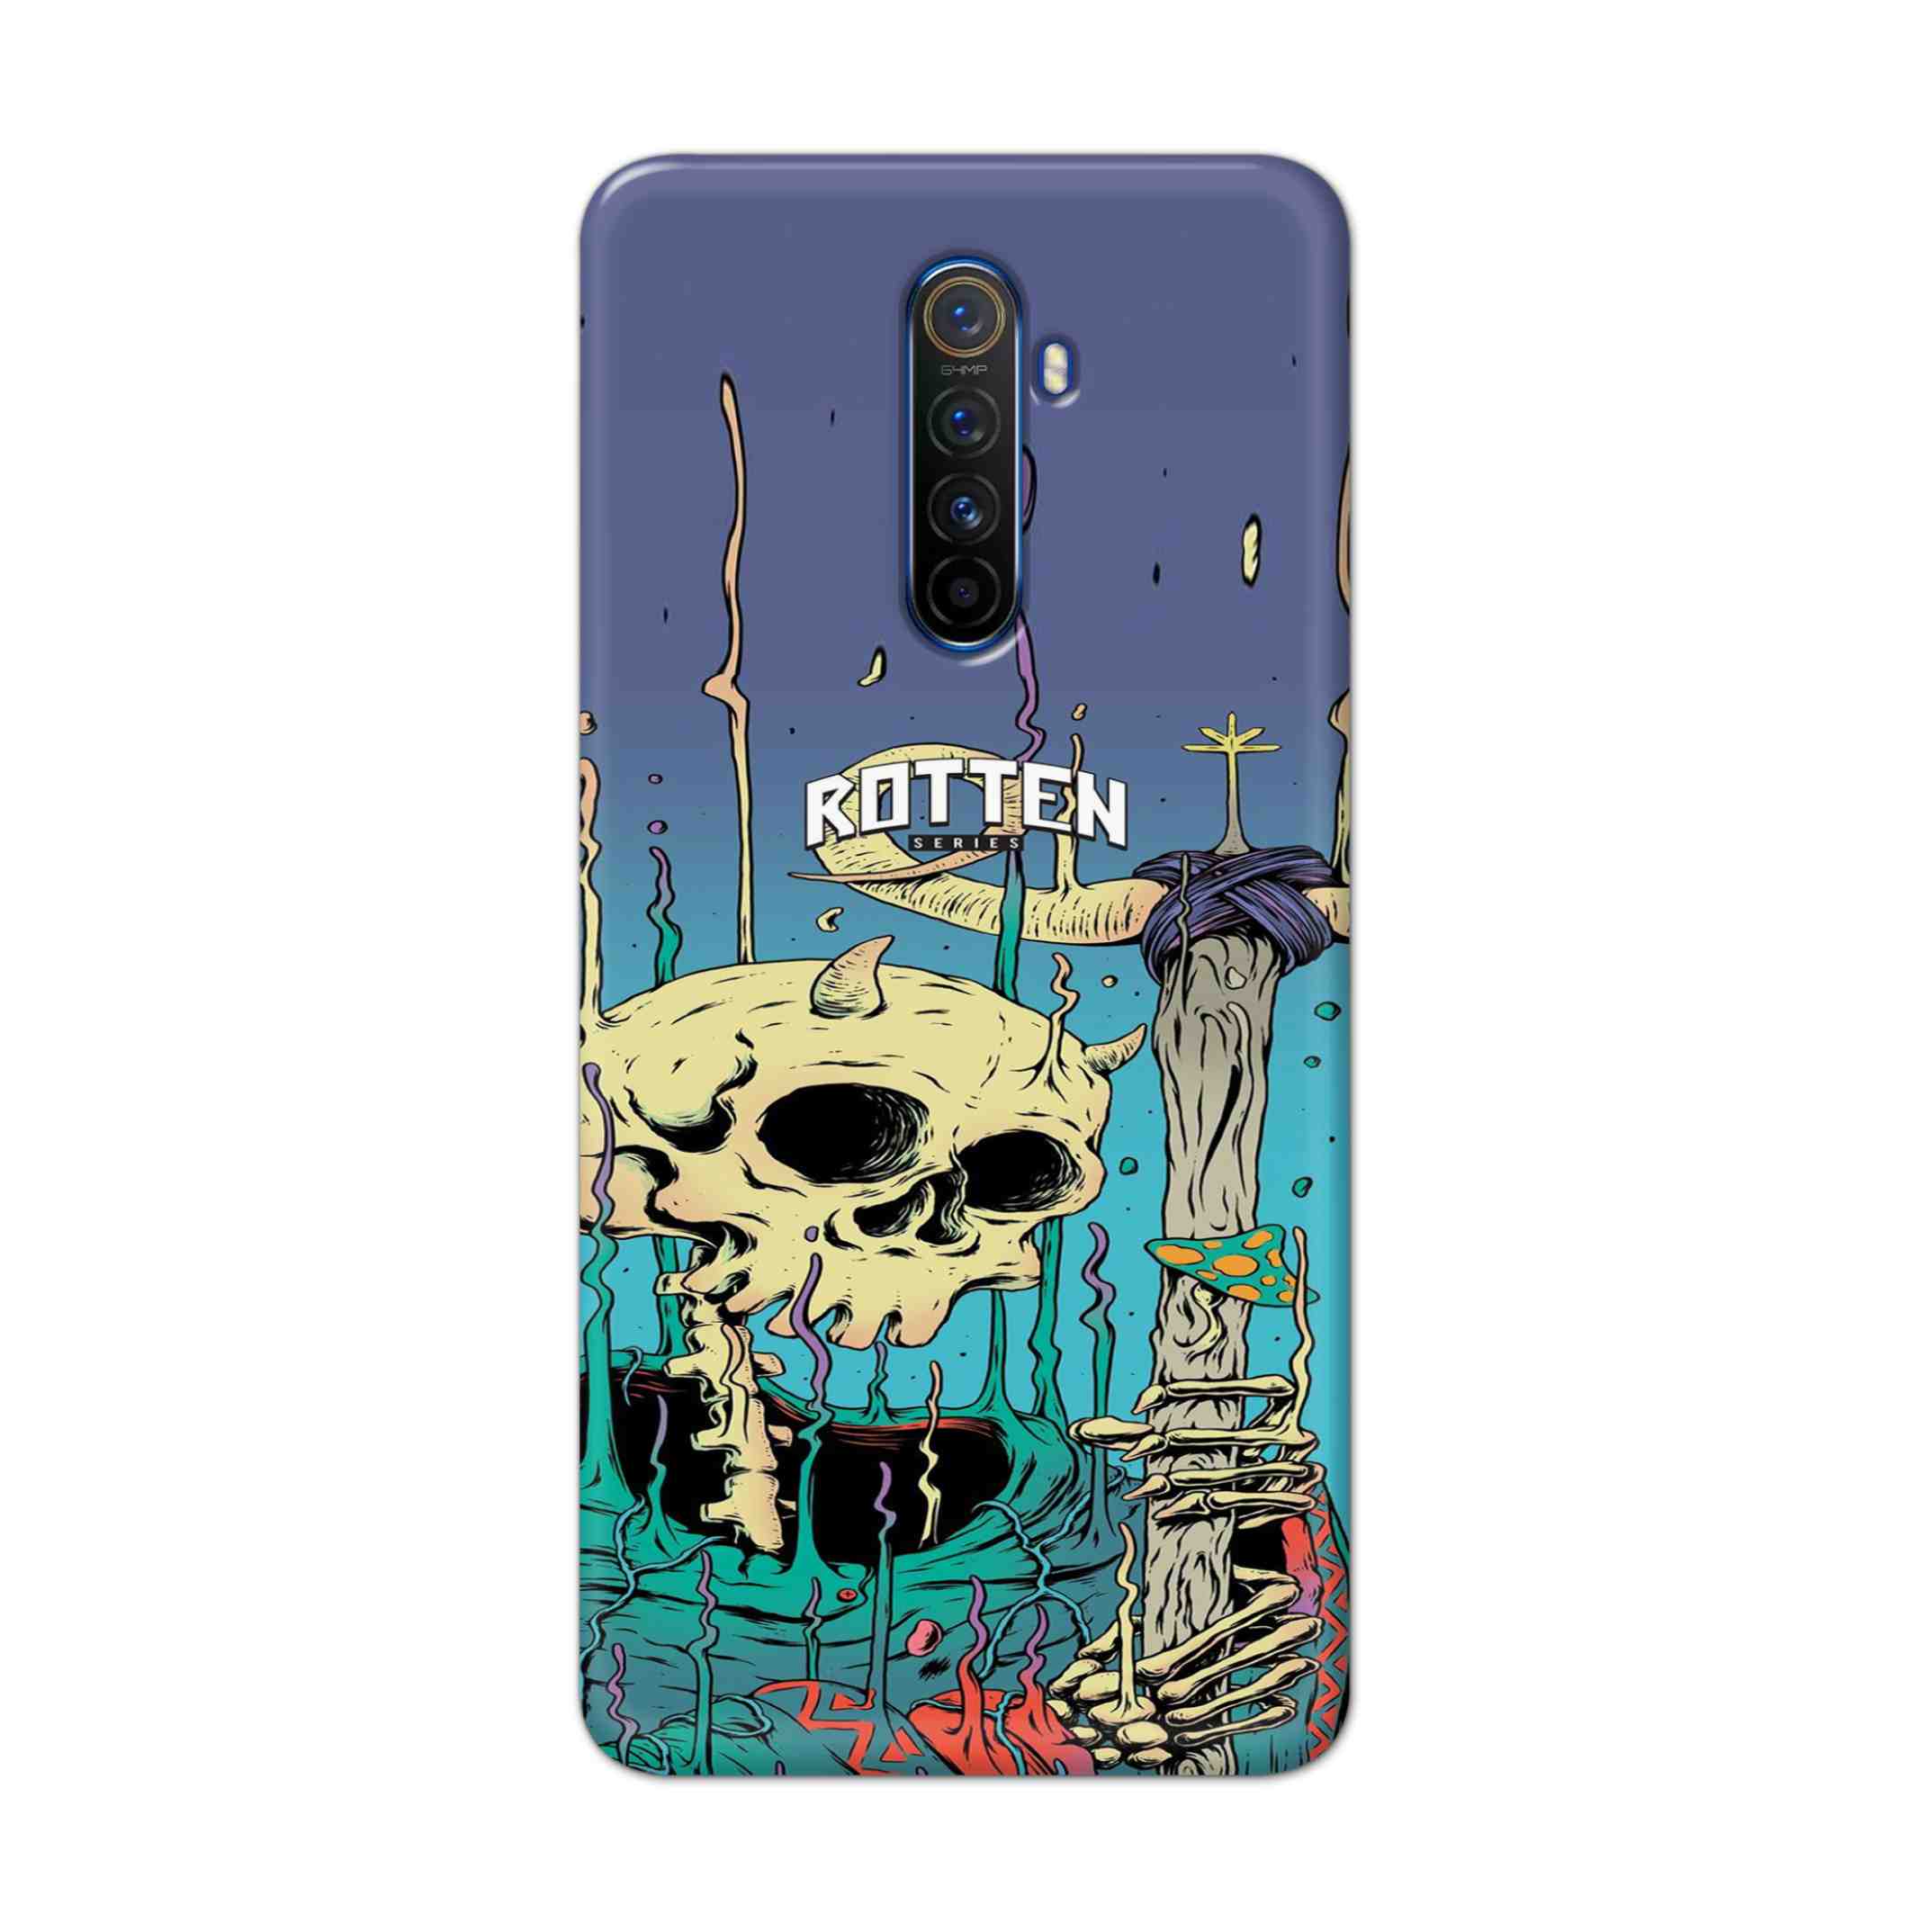 Buy Skull Hard Back Mobile Phone Case Cover For Realme X2 Pro Online